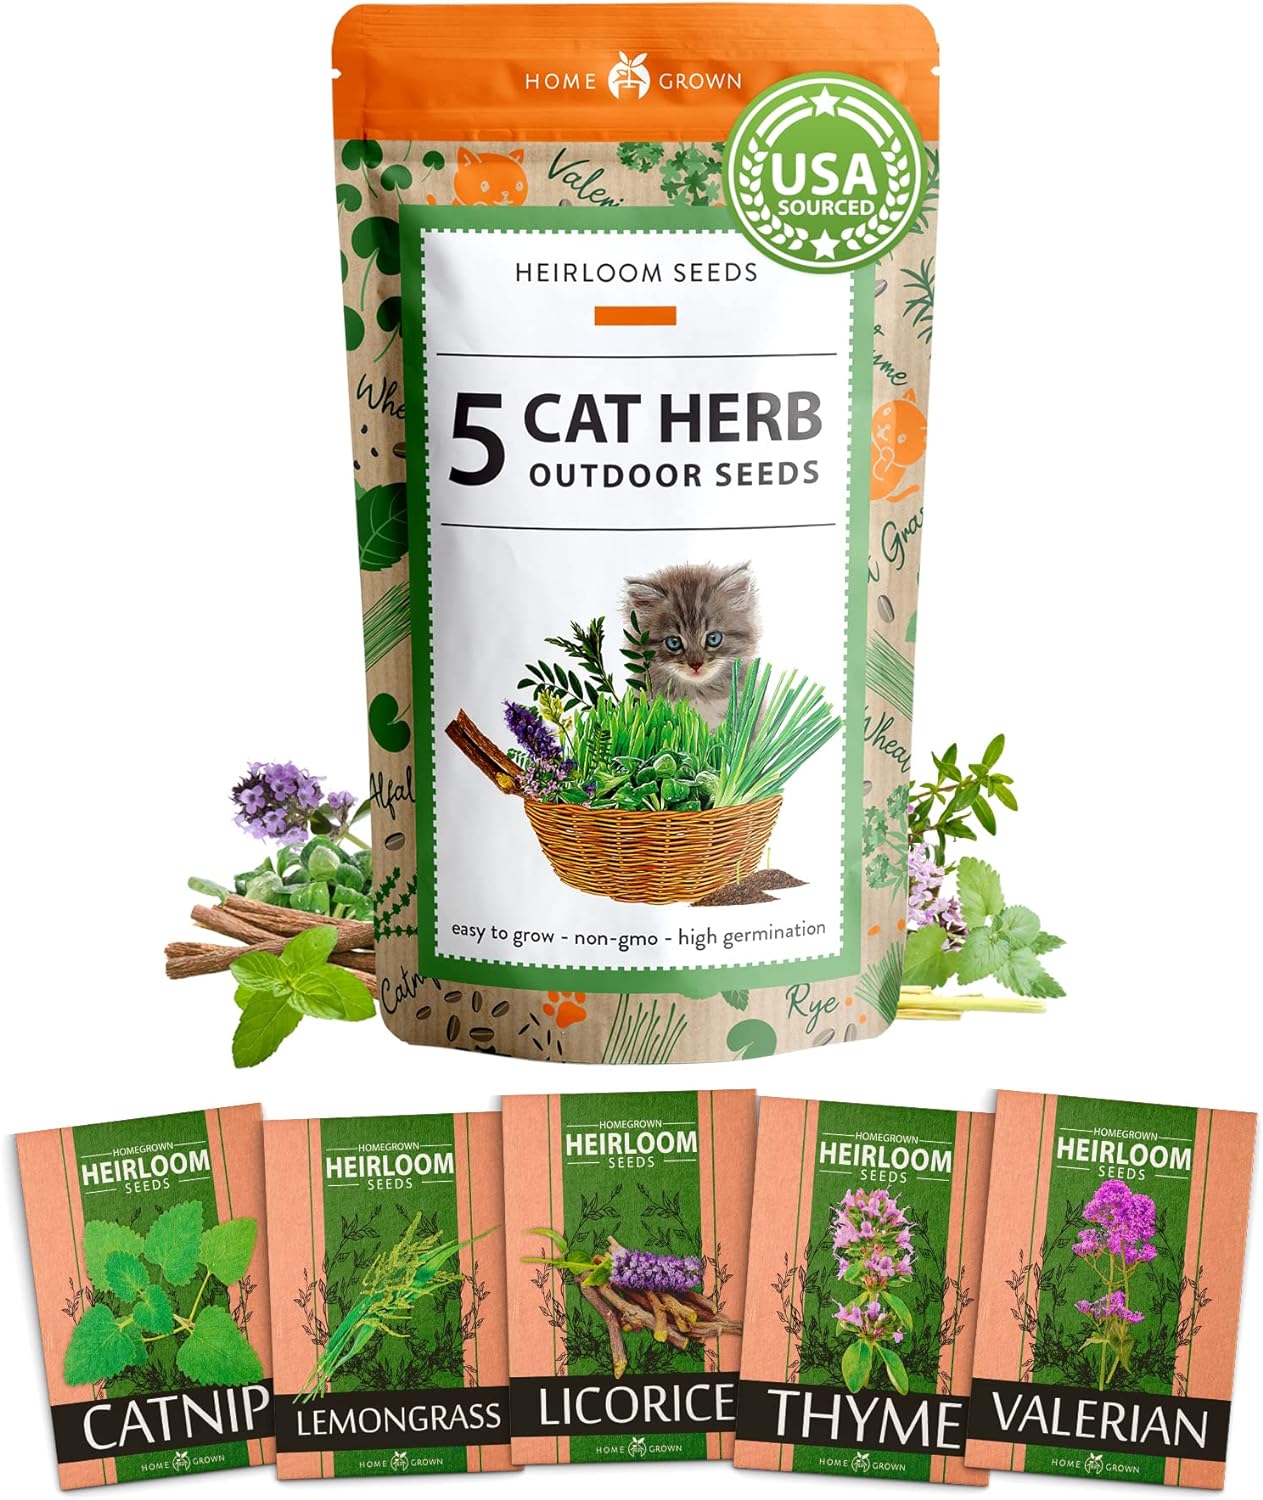 5 Cat Herb Outdoor Seed Pack - 2100+ Cat Grass Seeds